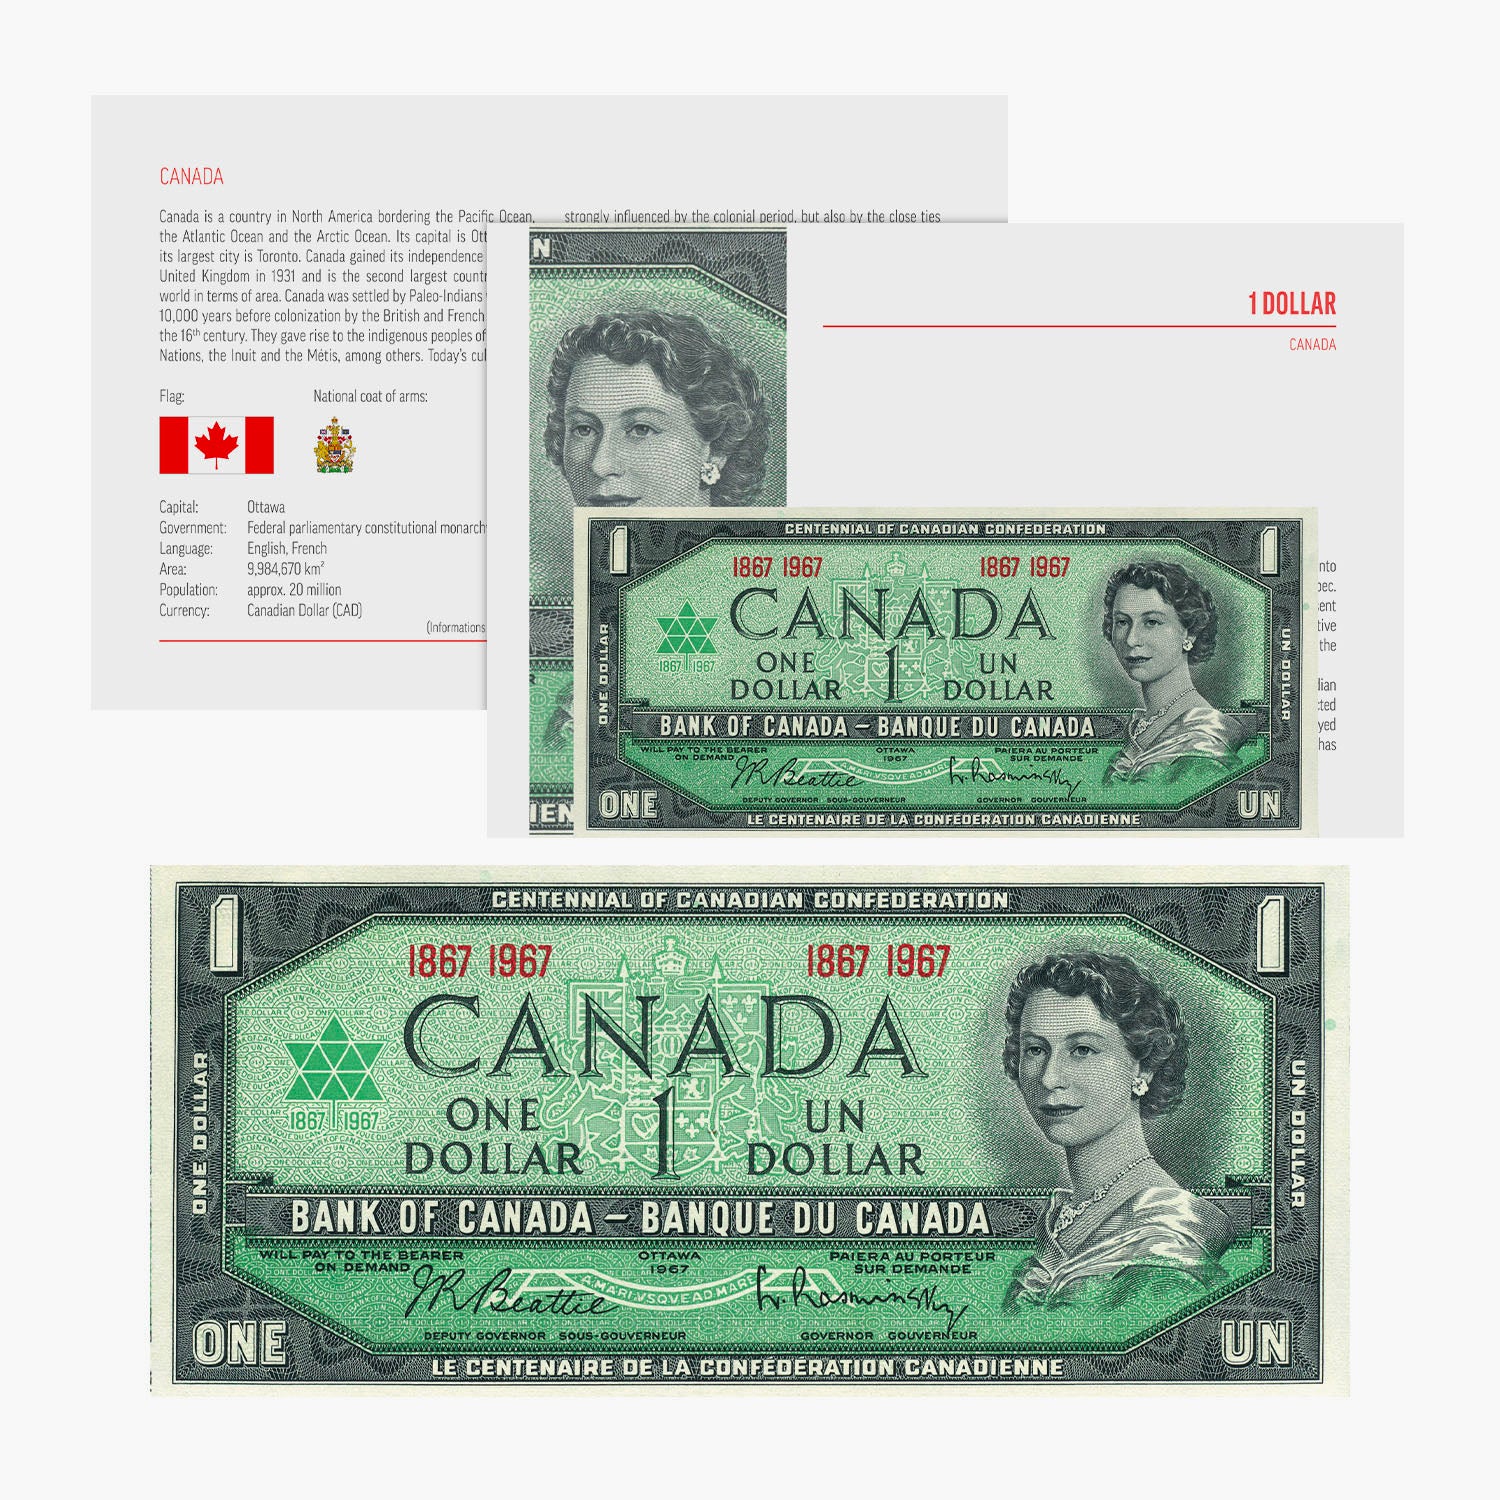 Her Majesty Queen Elizabeth II 100 Years of Canada Banknote